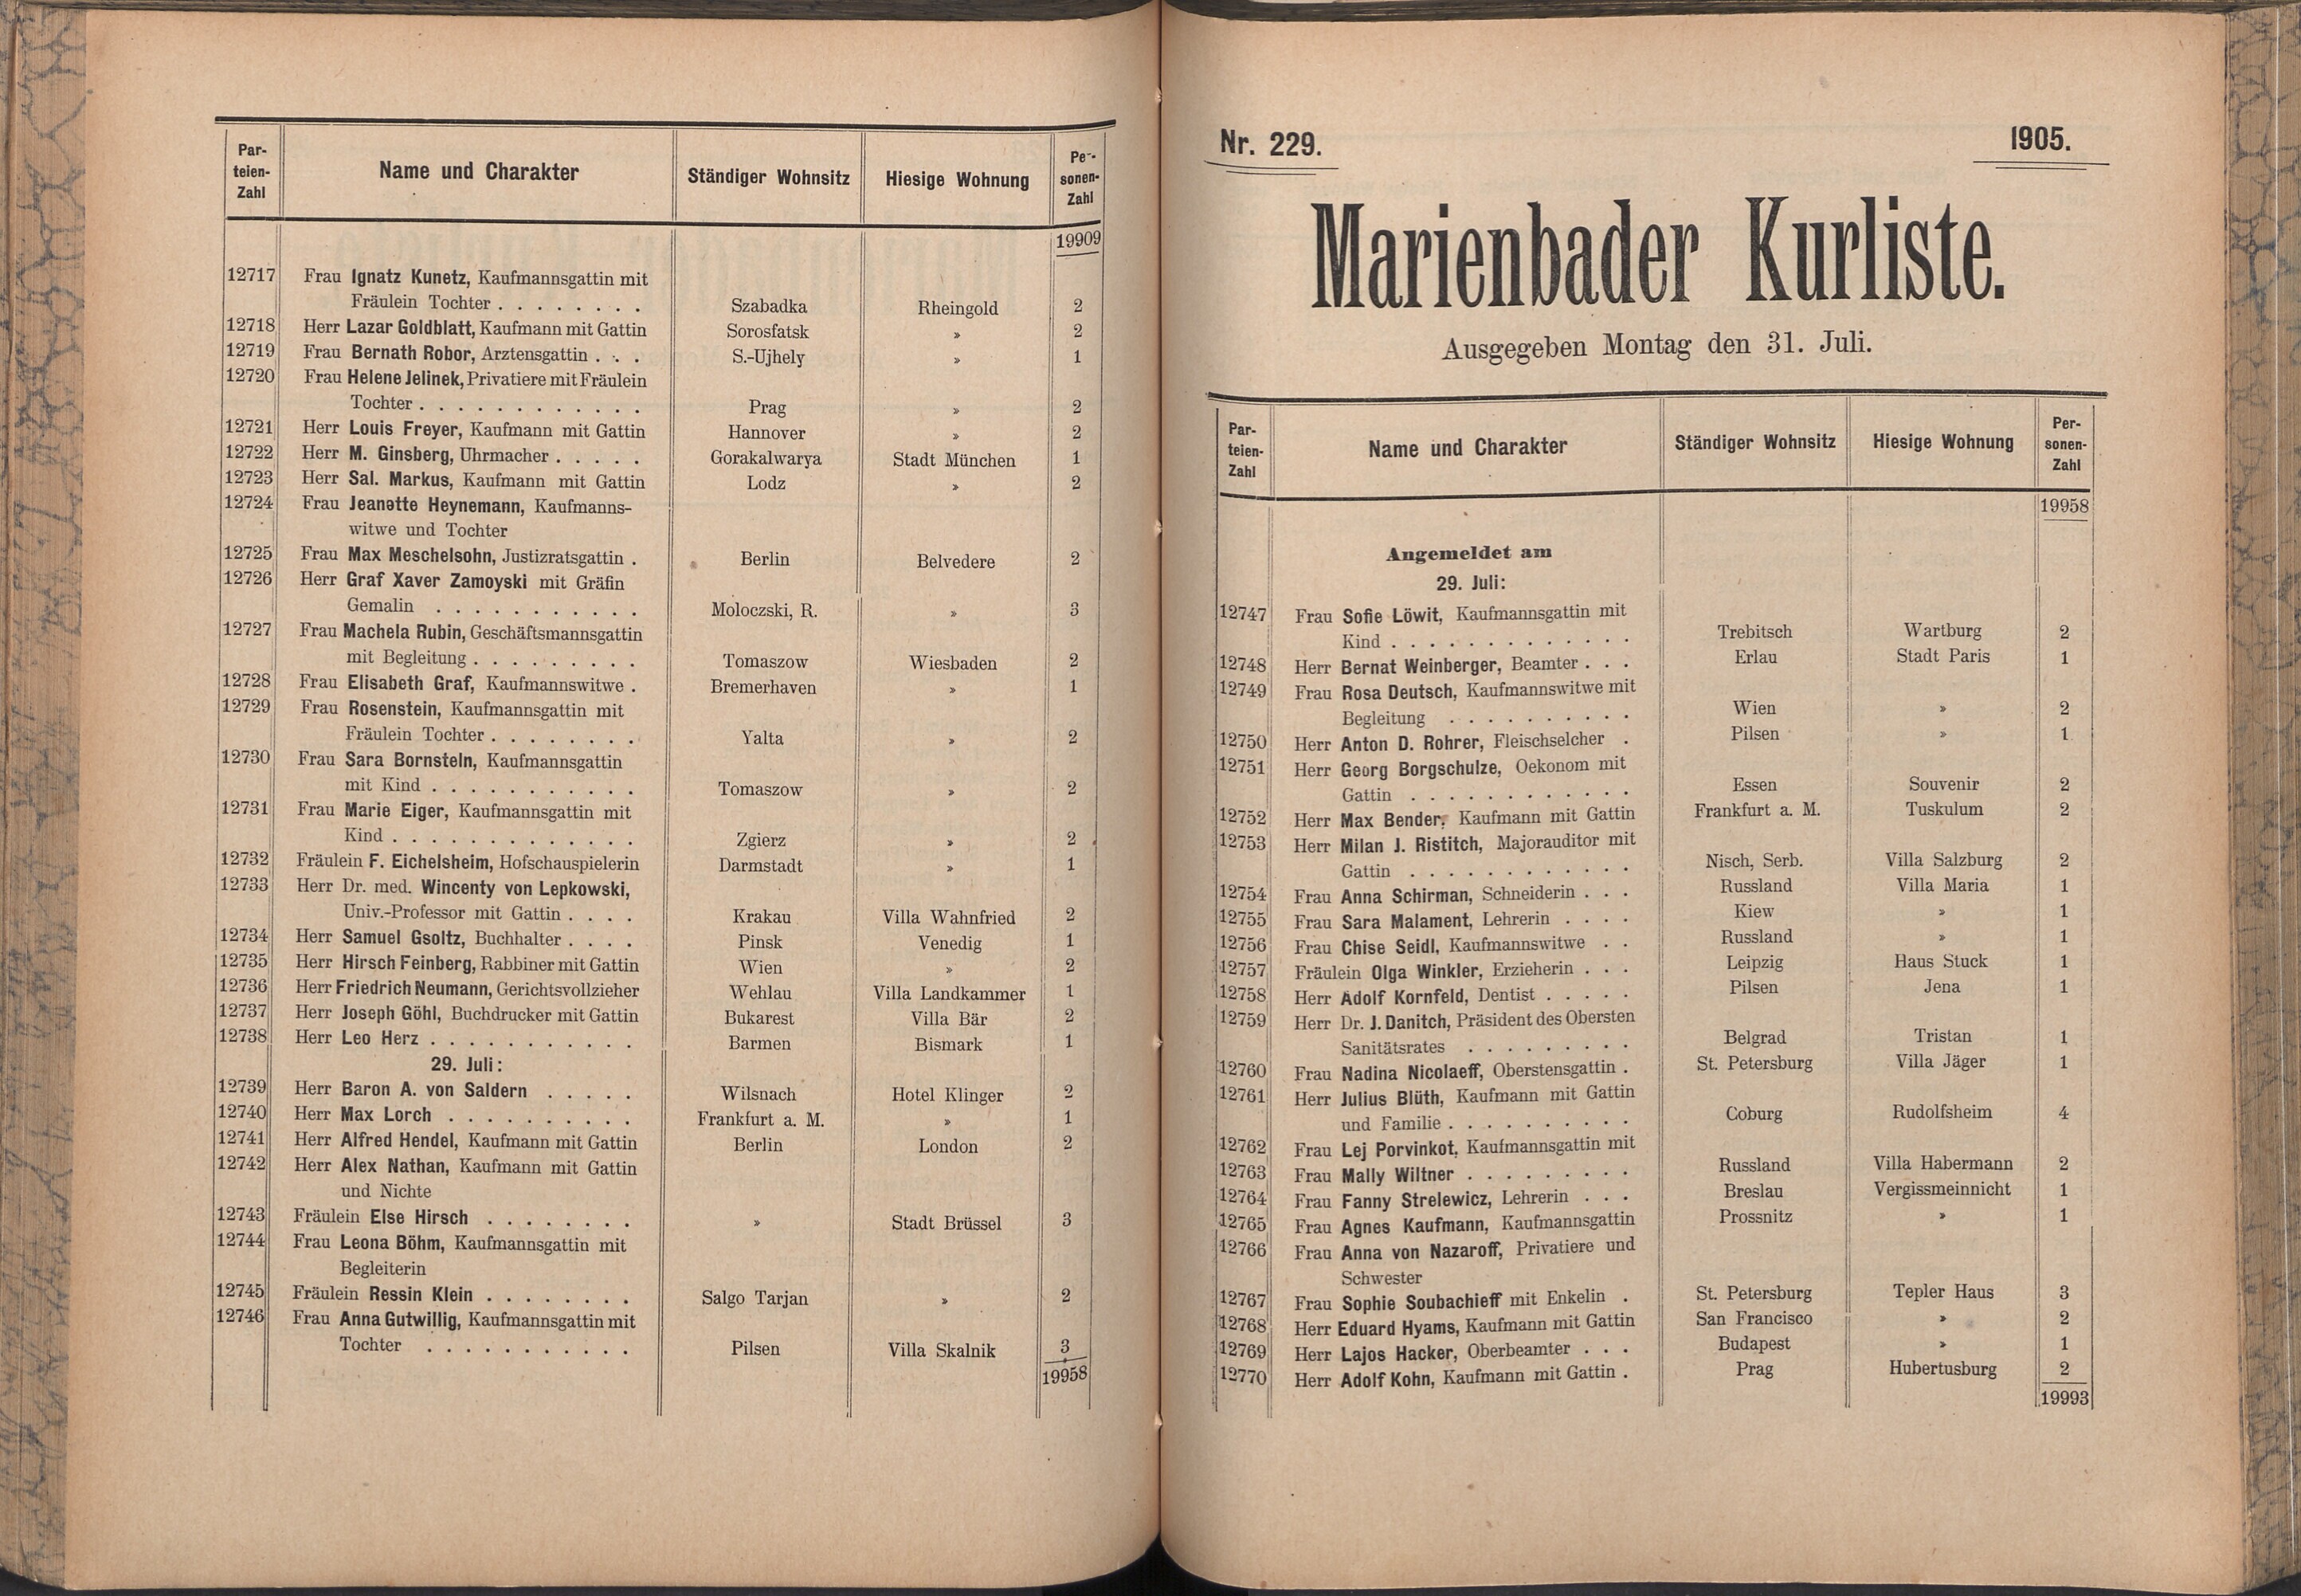 304. soap-ch_knihovna_marienbader-kurliste-1905_3040